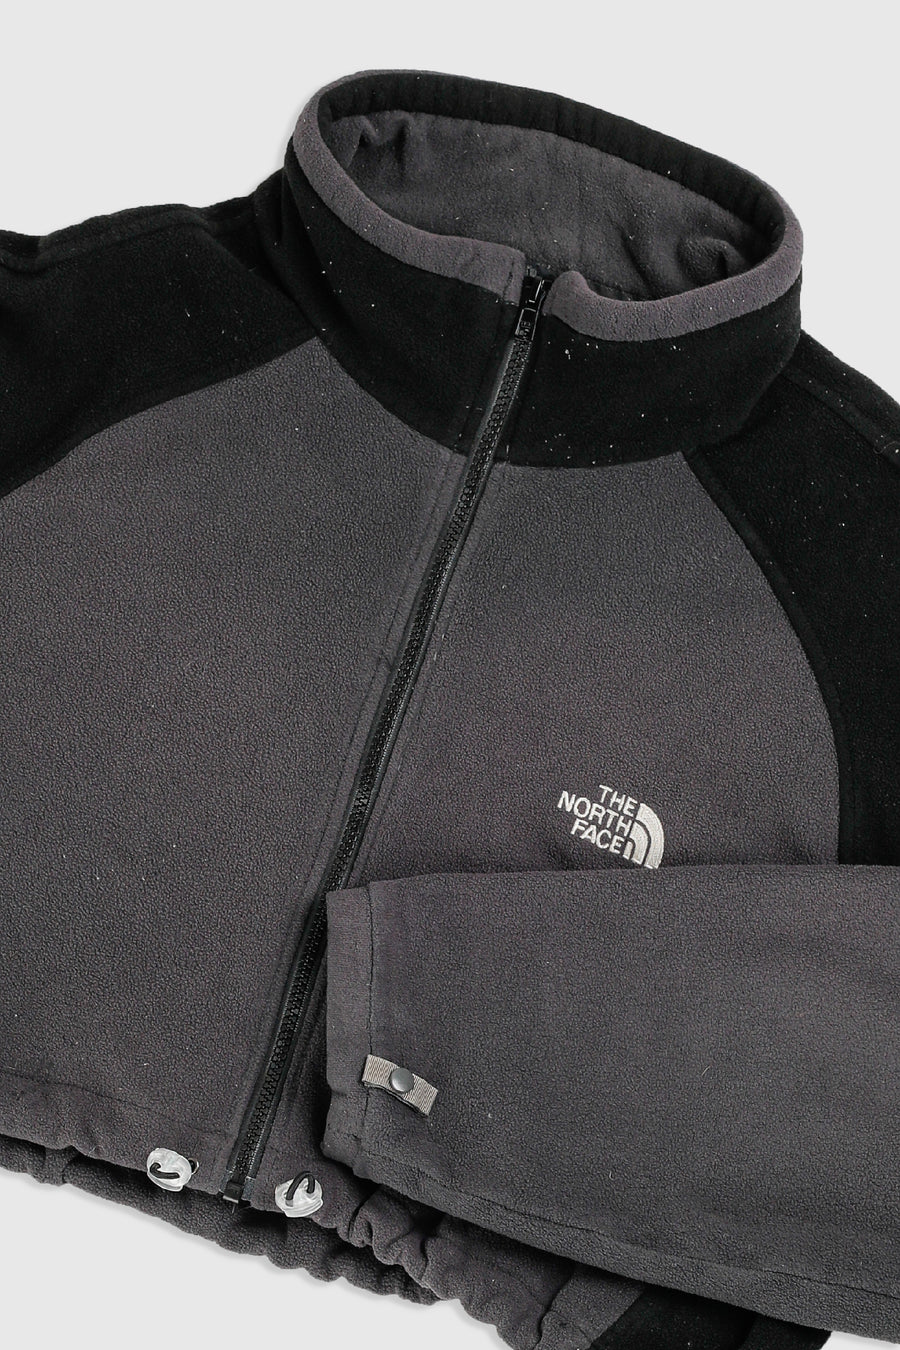 Rework North Face Crop Fleece Jacket - XXL